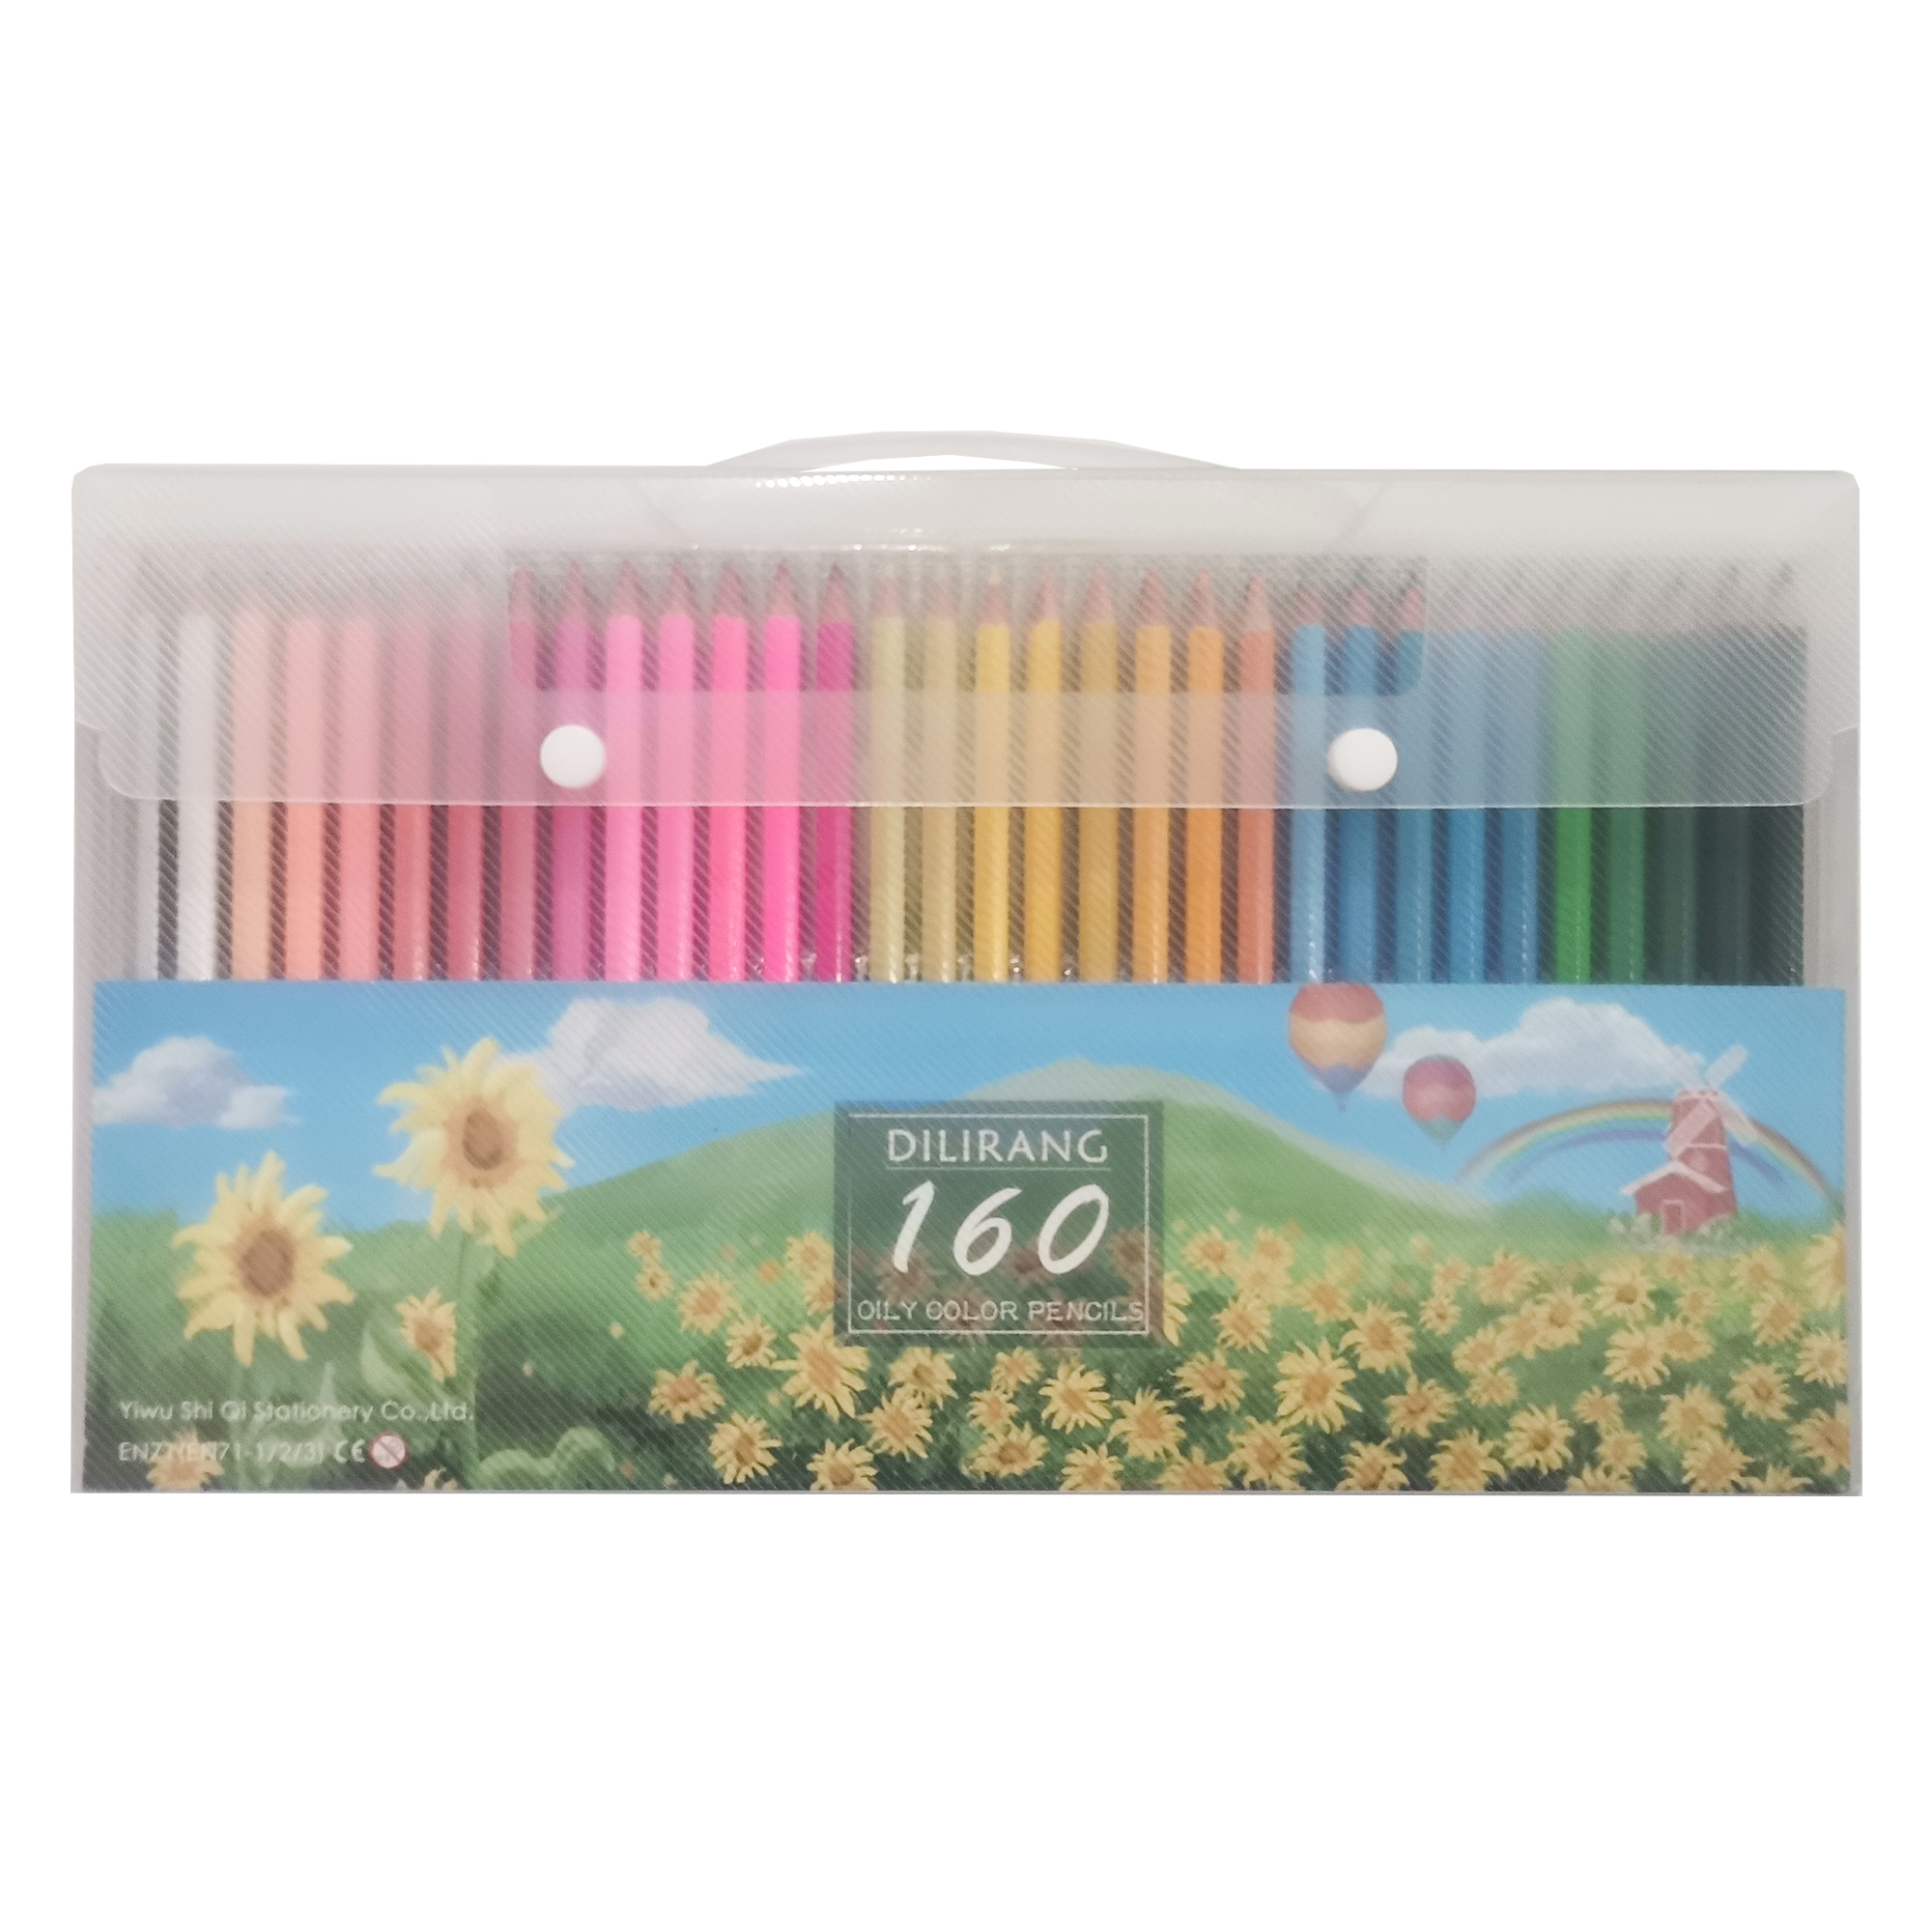 مداد رنگی 160 رنگ دایلی رانگ کد 9654